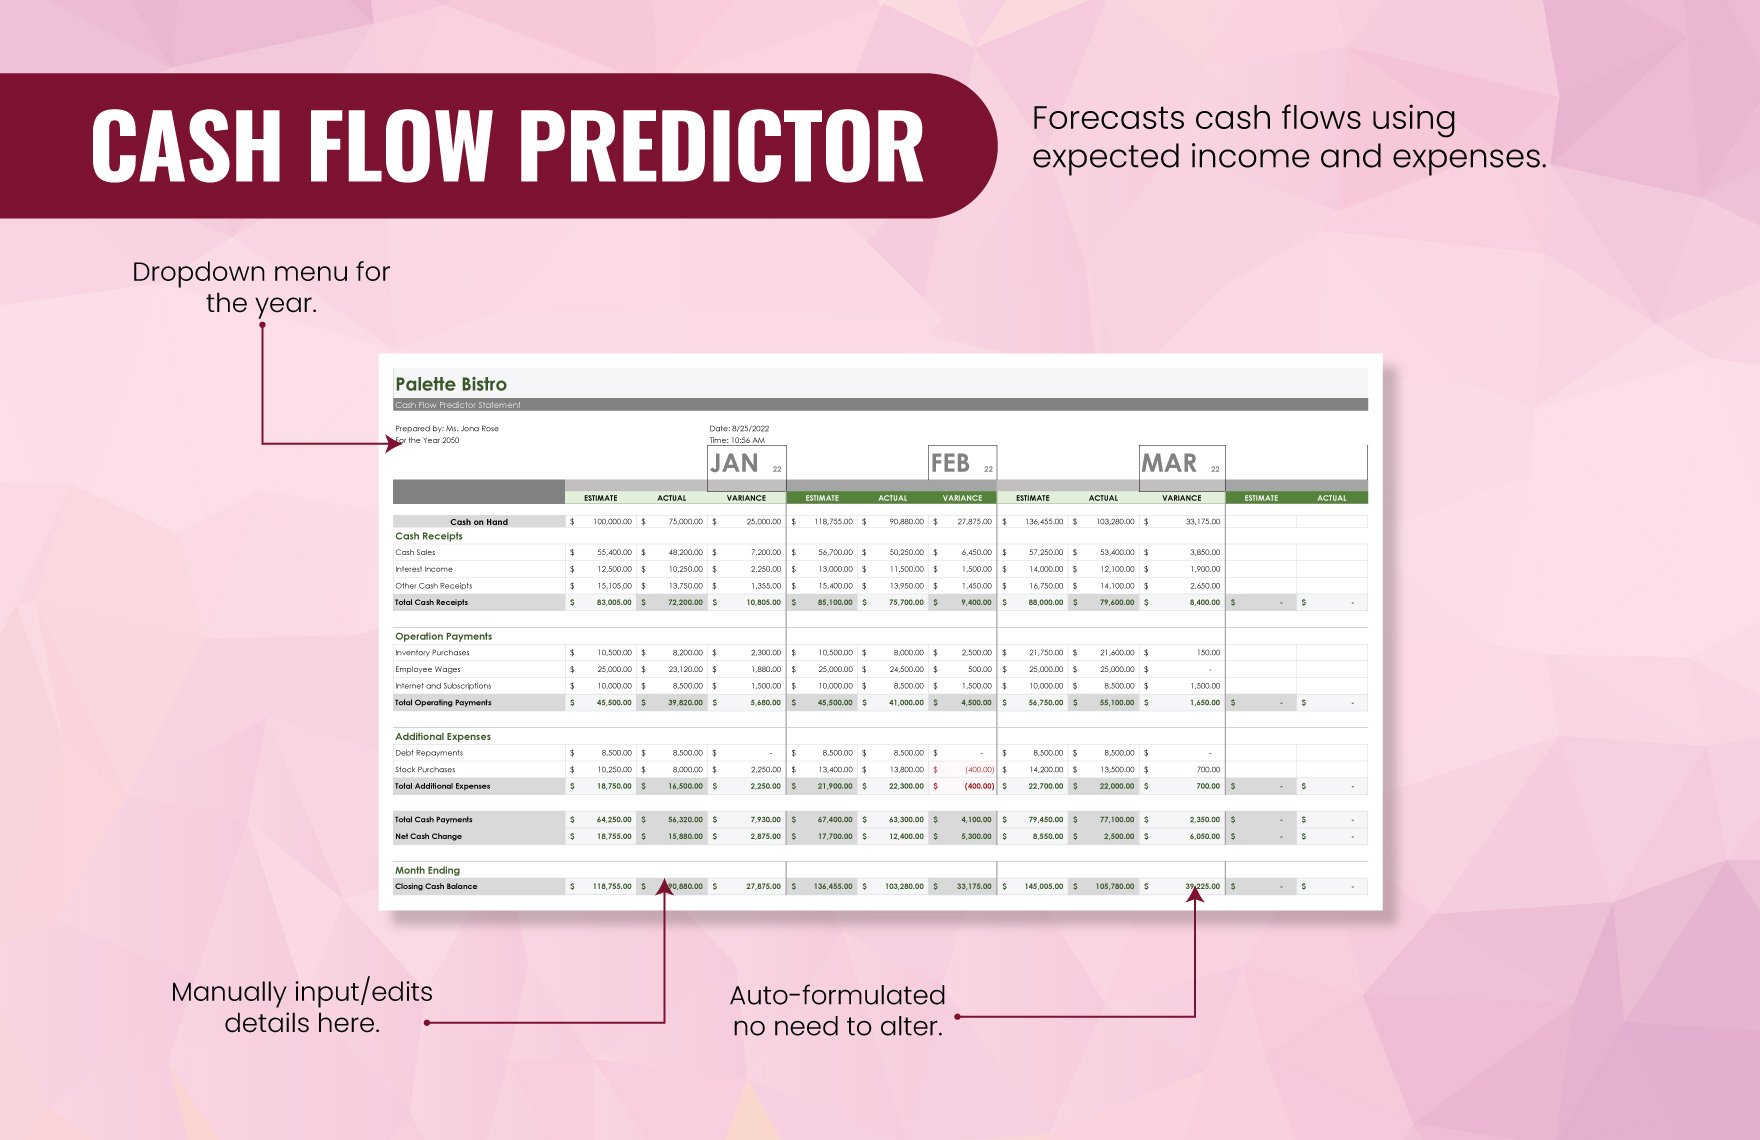 Cash Flow Predictor Template